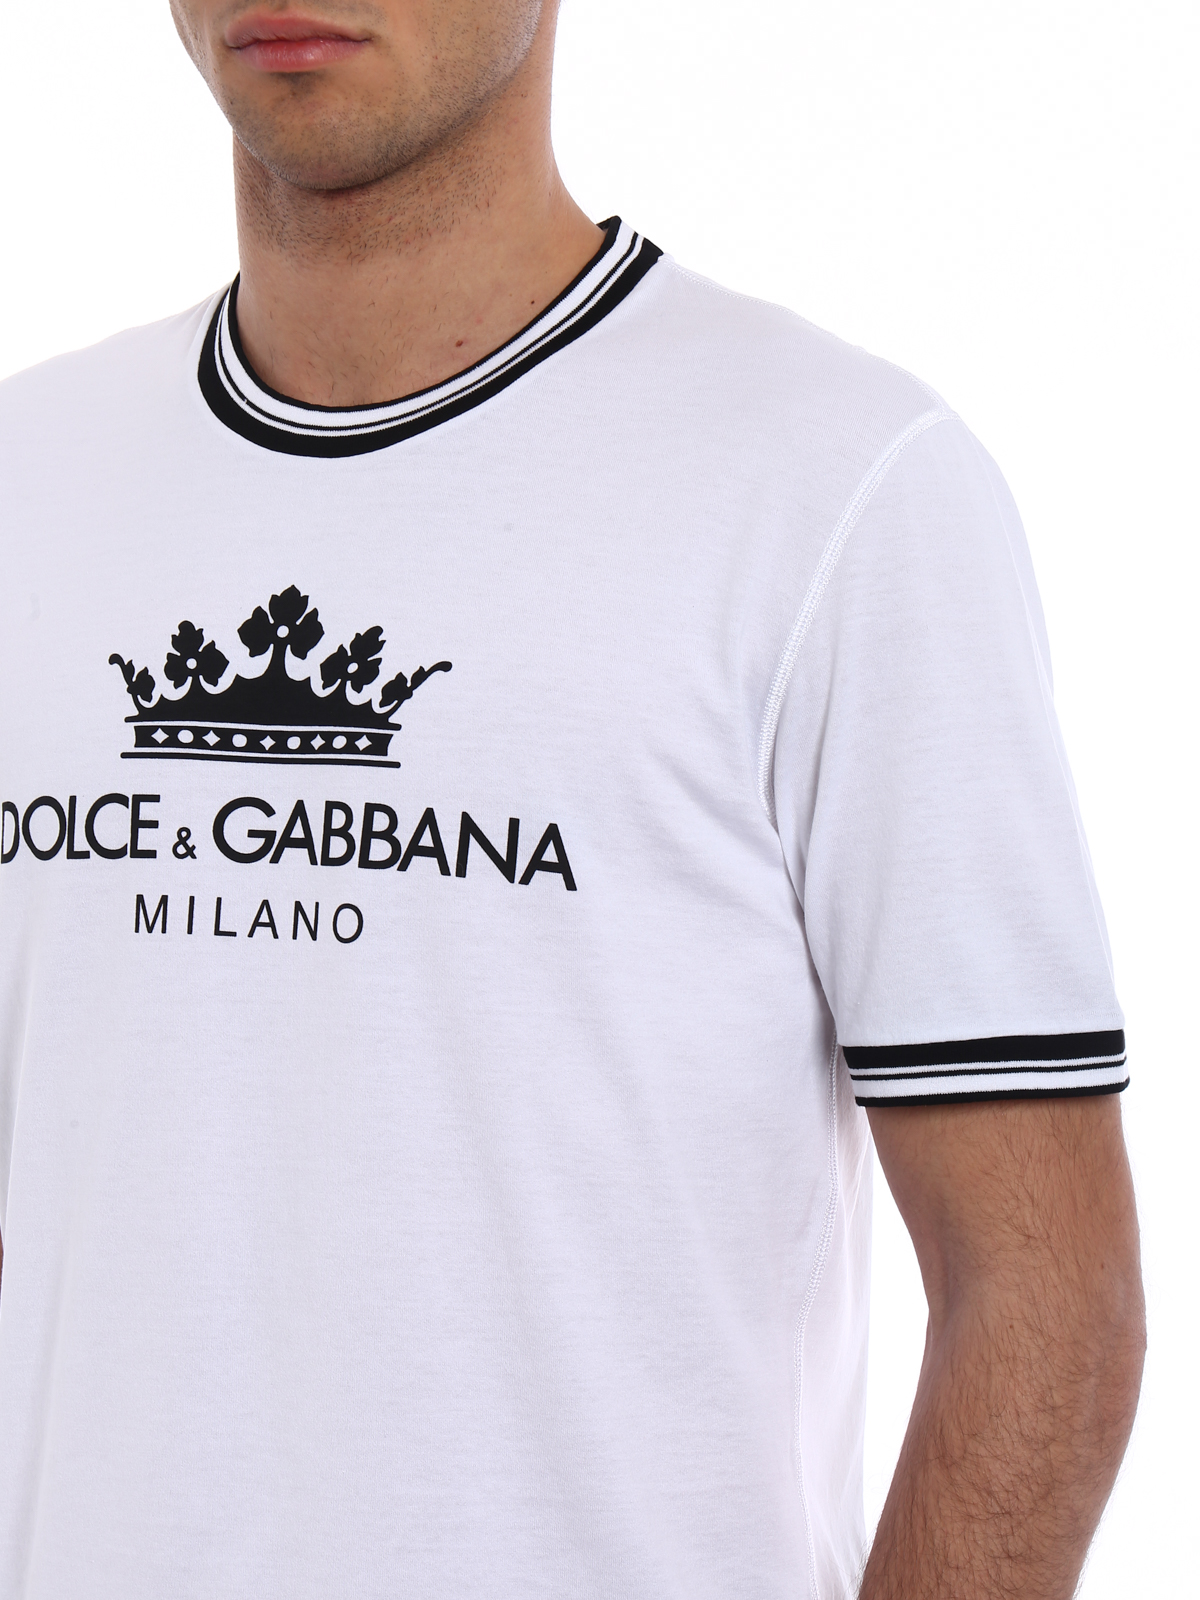 dolce and gabbana milano crown t shirt